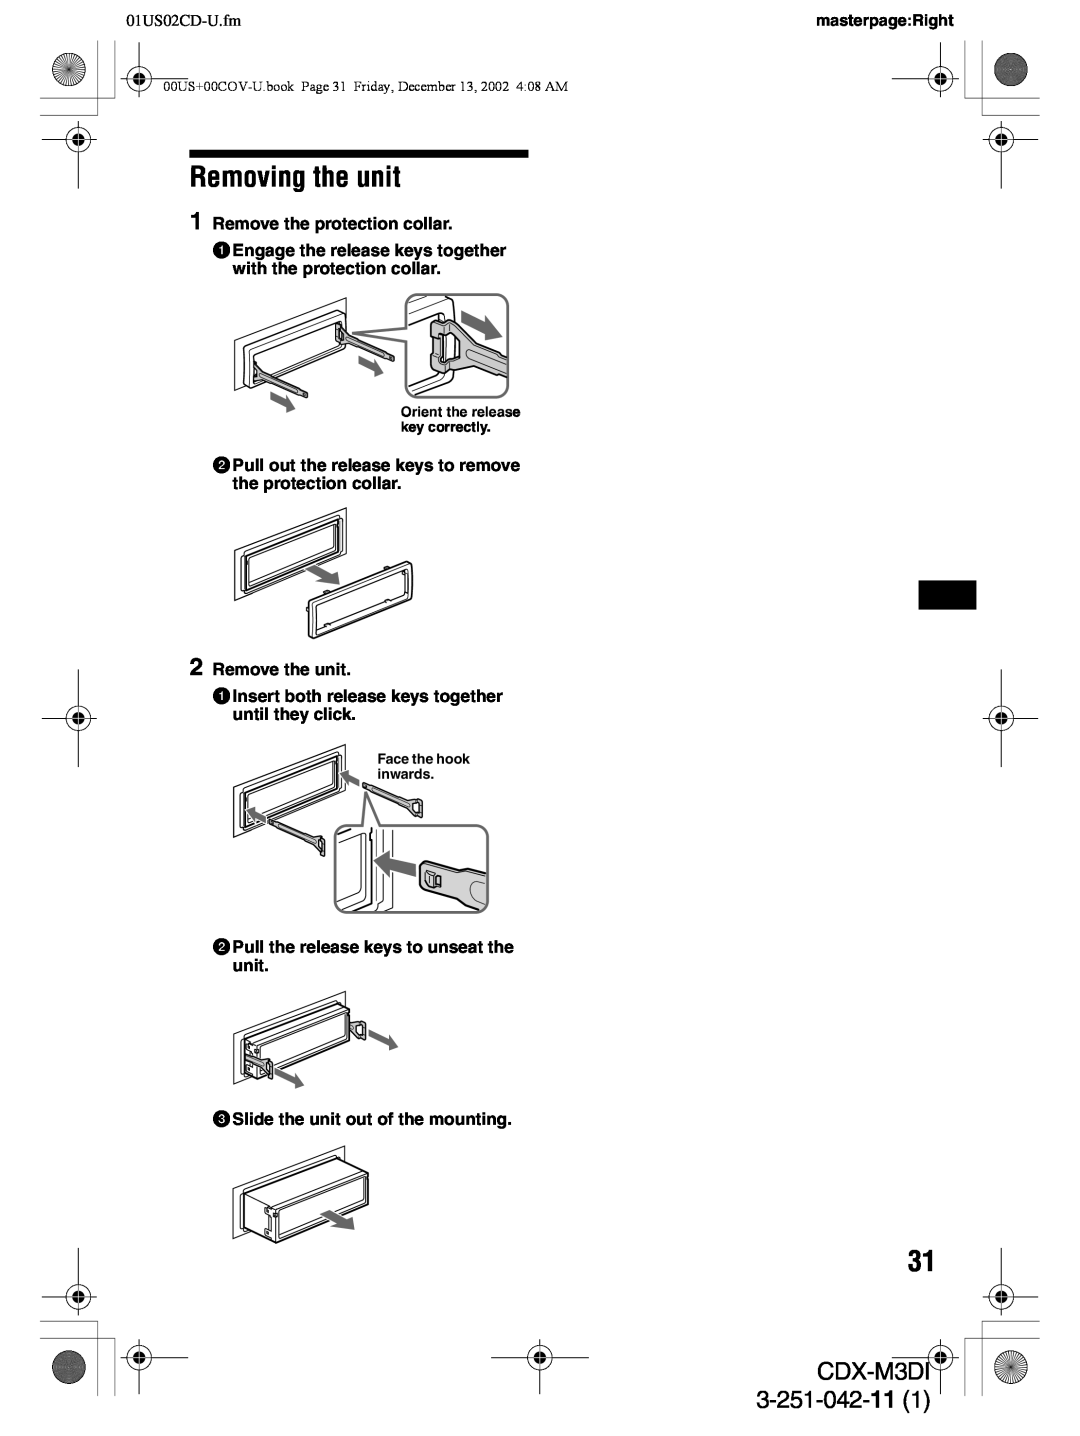 Sony CDX-M3DI operating instructions Removing the unit, 3-251-042-11, 01US02CD-U.fm 